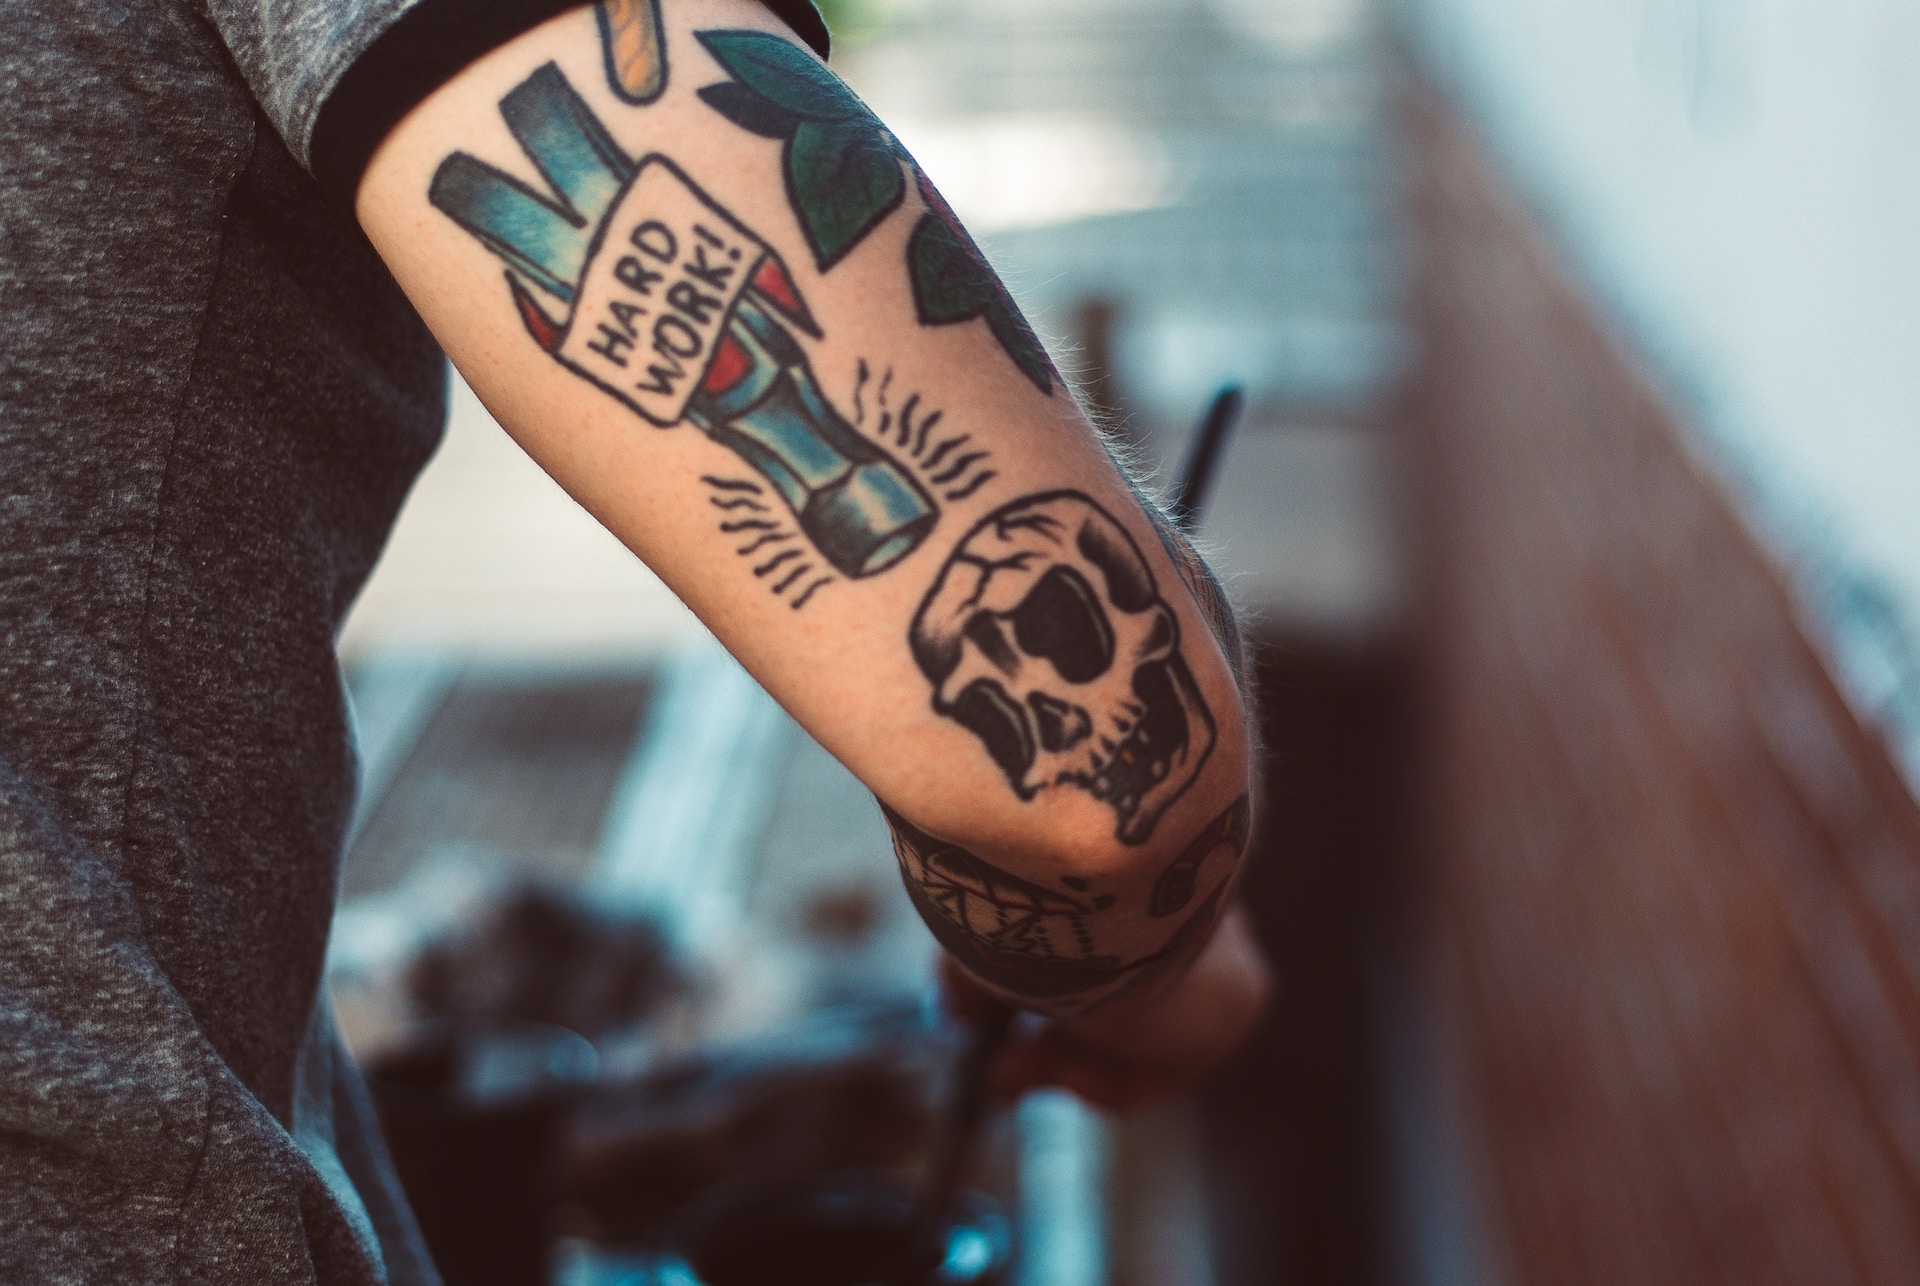 joker tattoo meaning